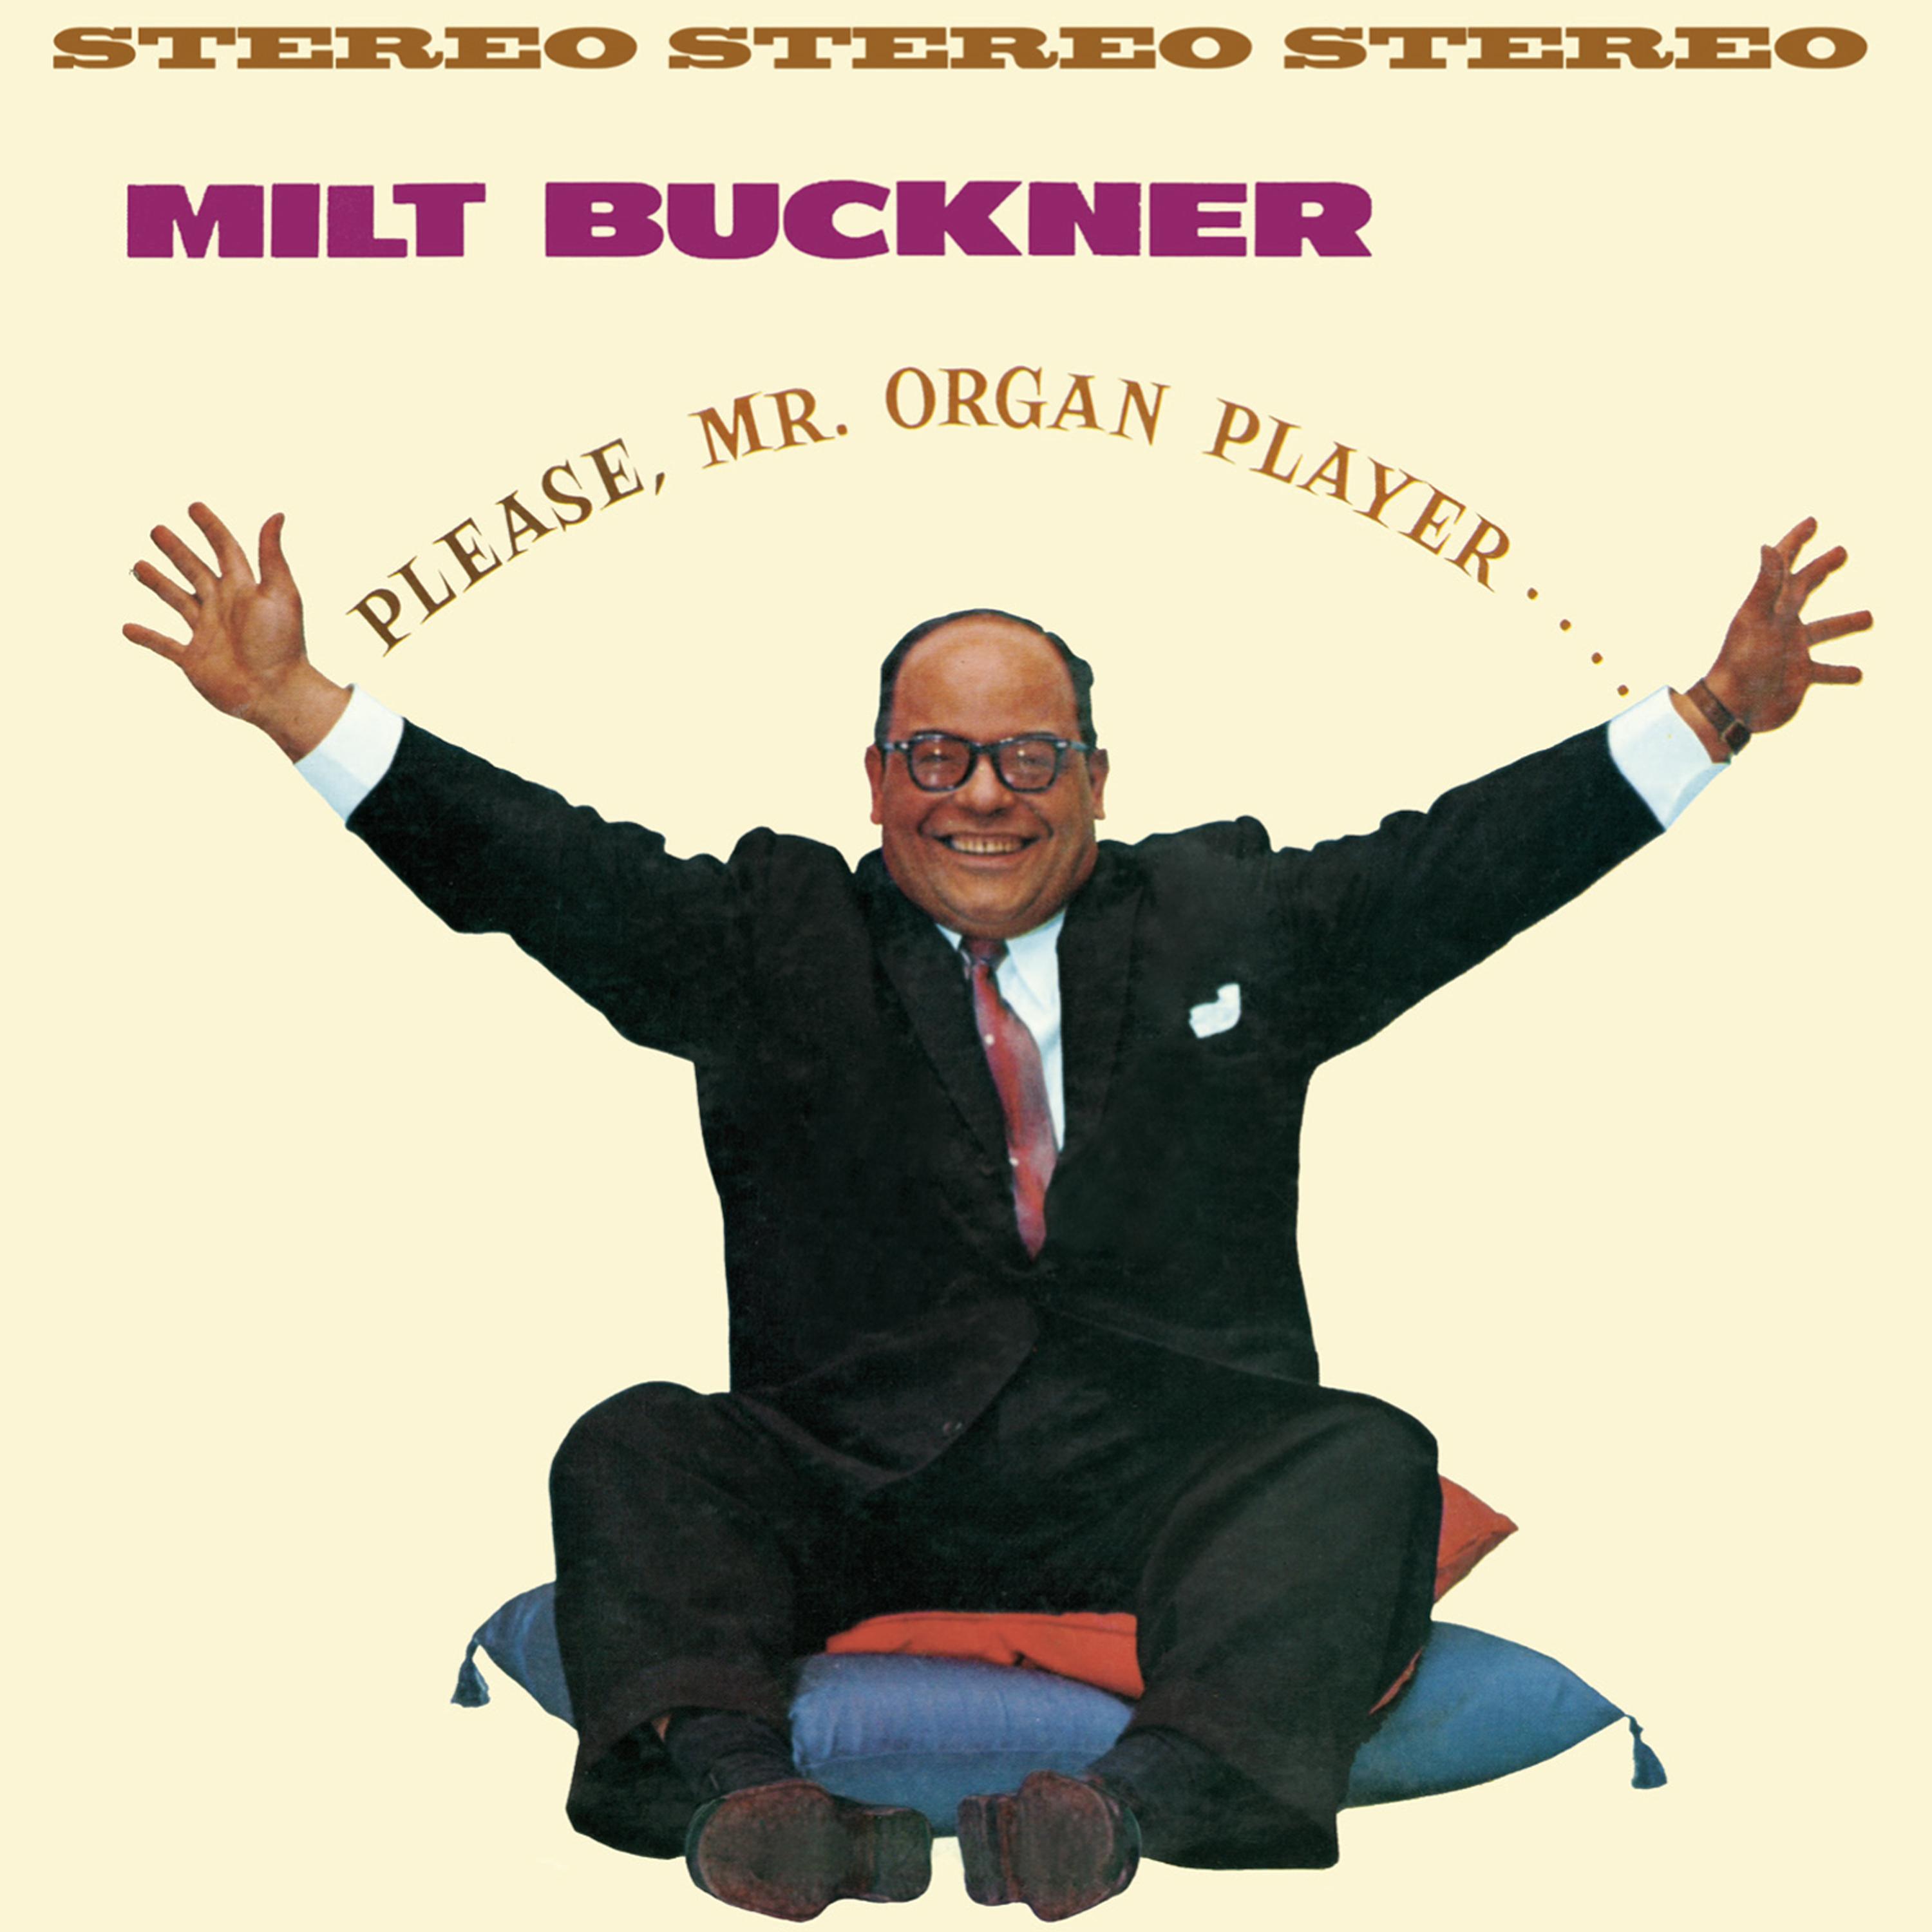 Please, Mr. Organ Player